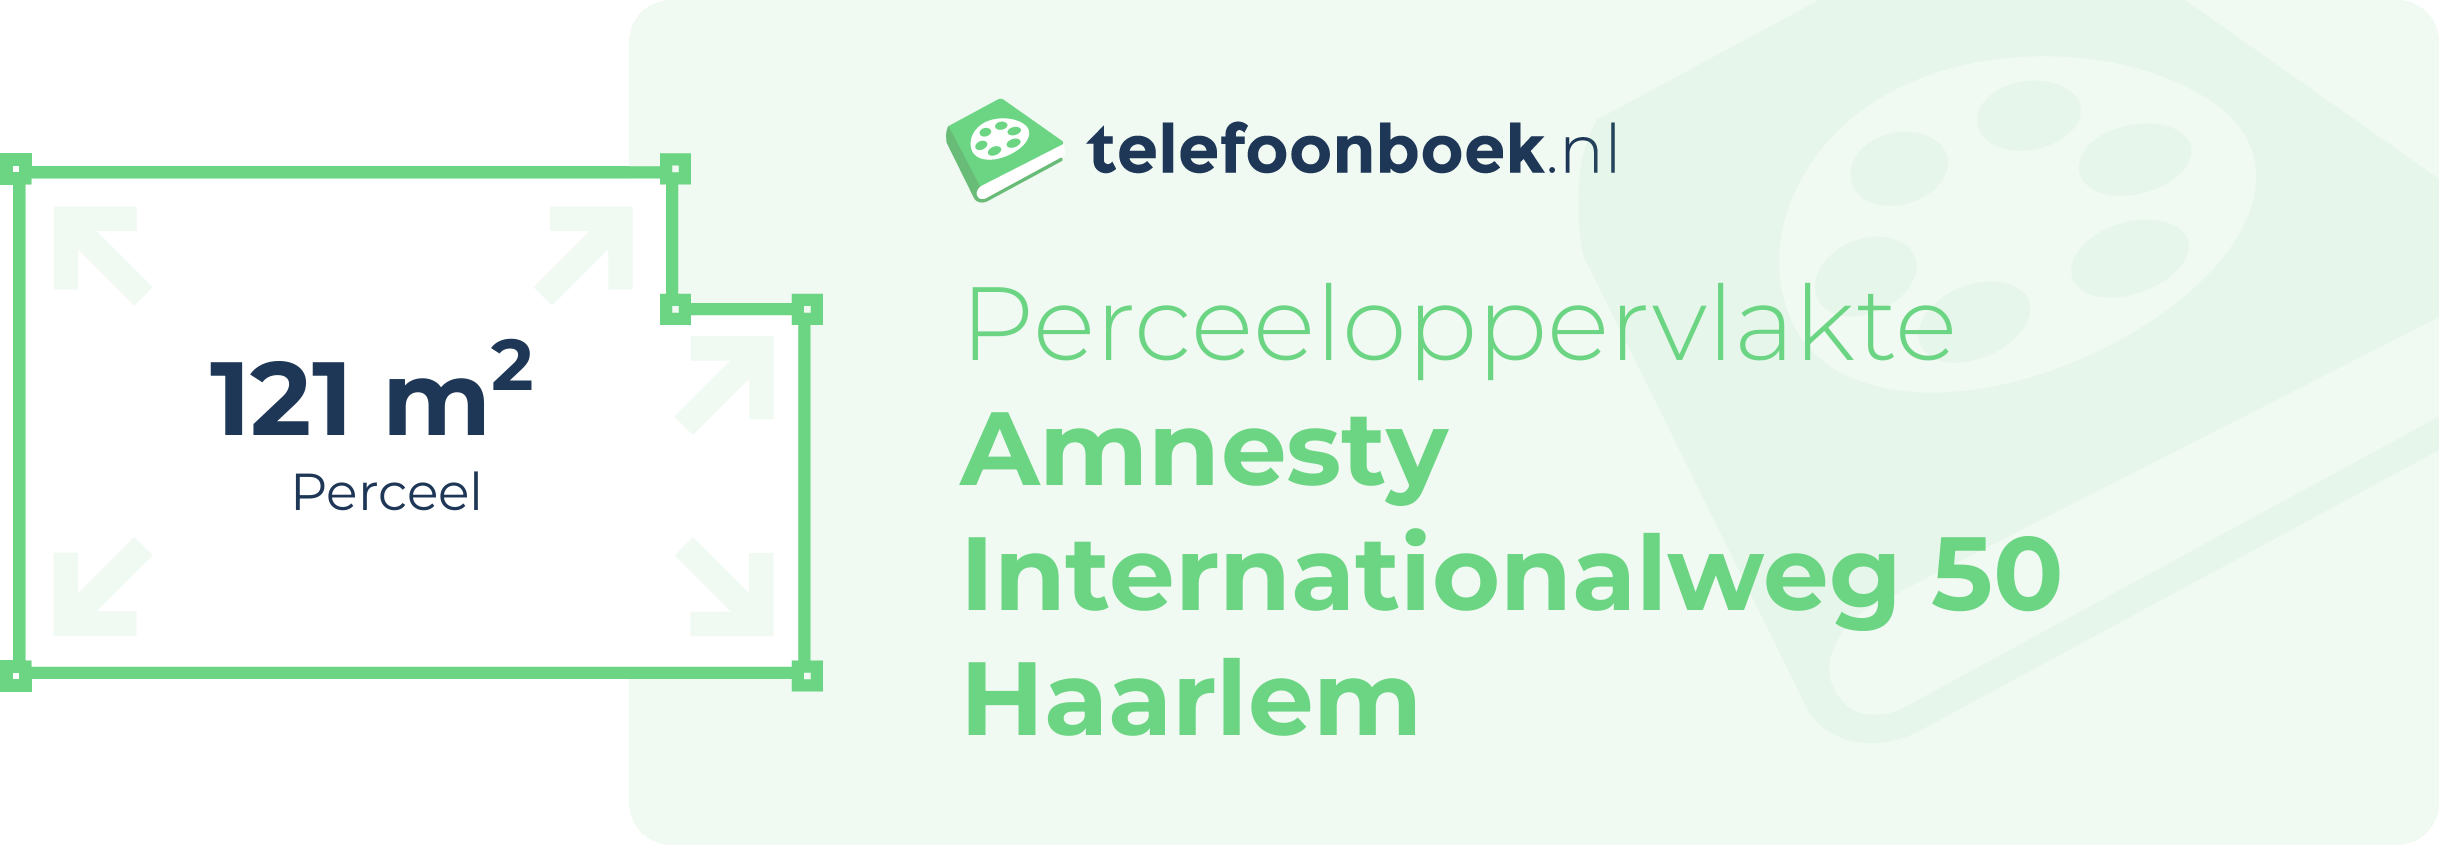 Perceeloppervlakte Amnesty Internationalweg 50 Haarlem